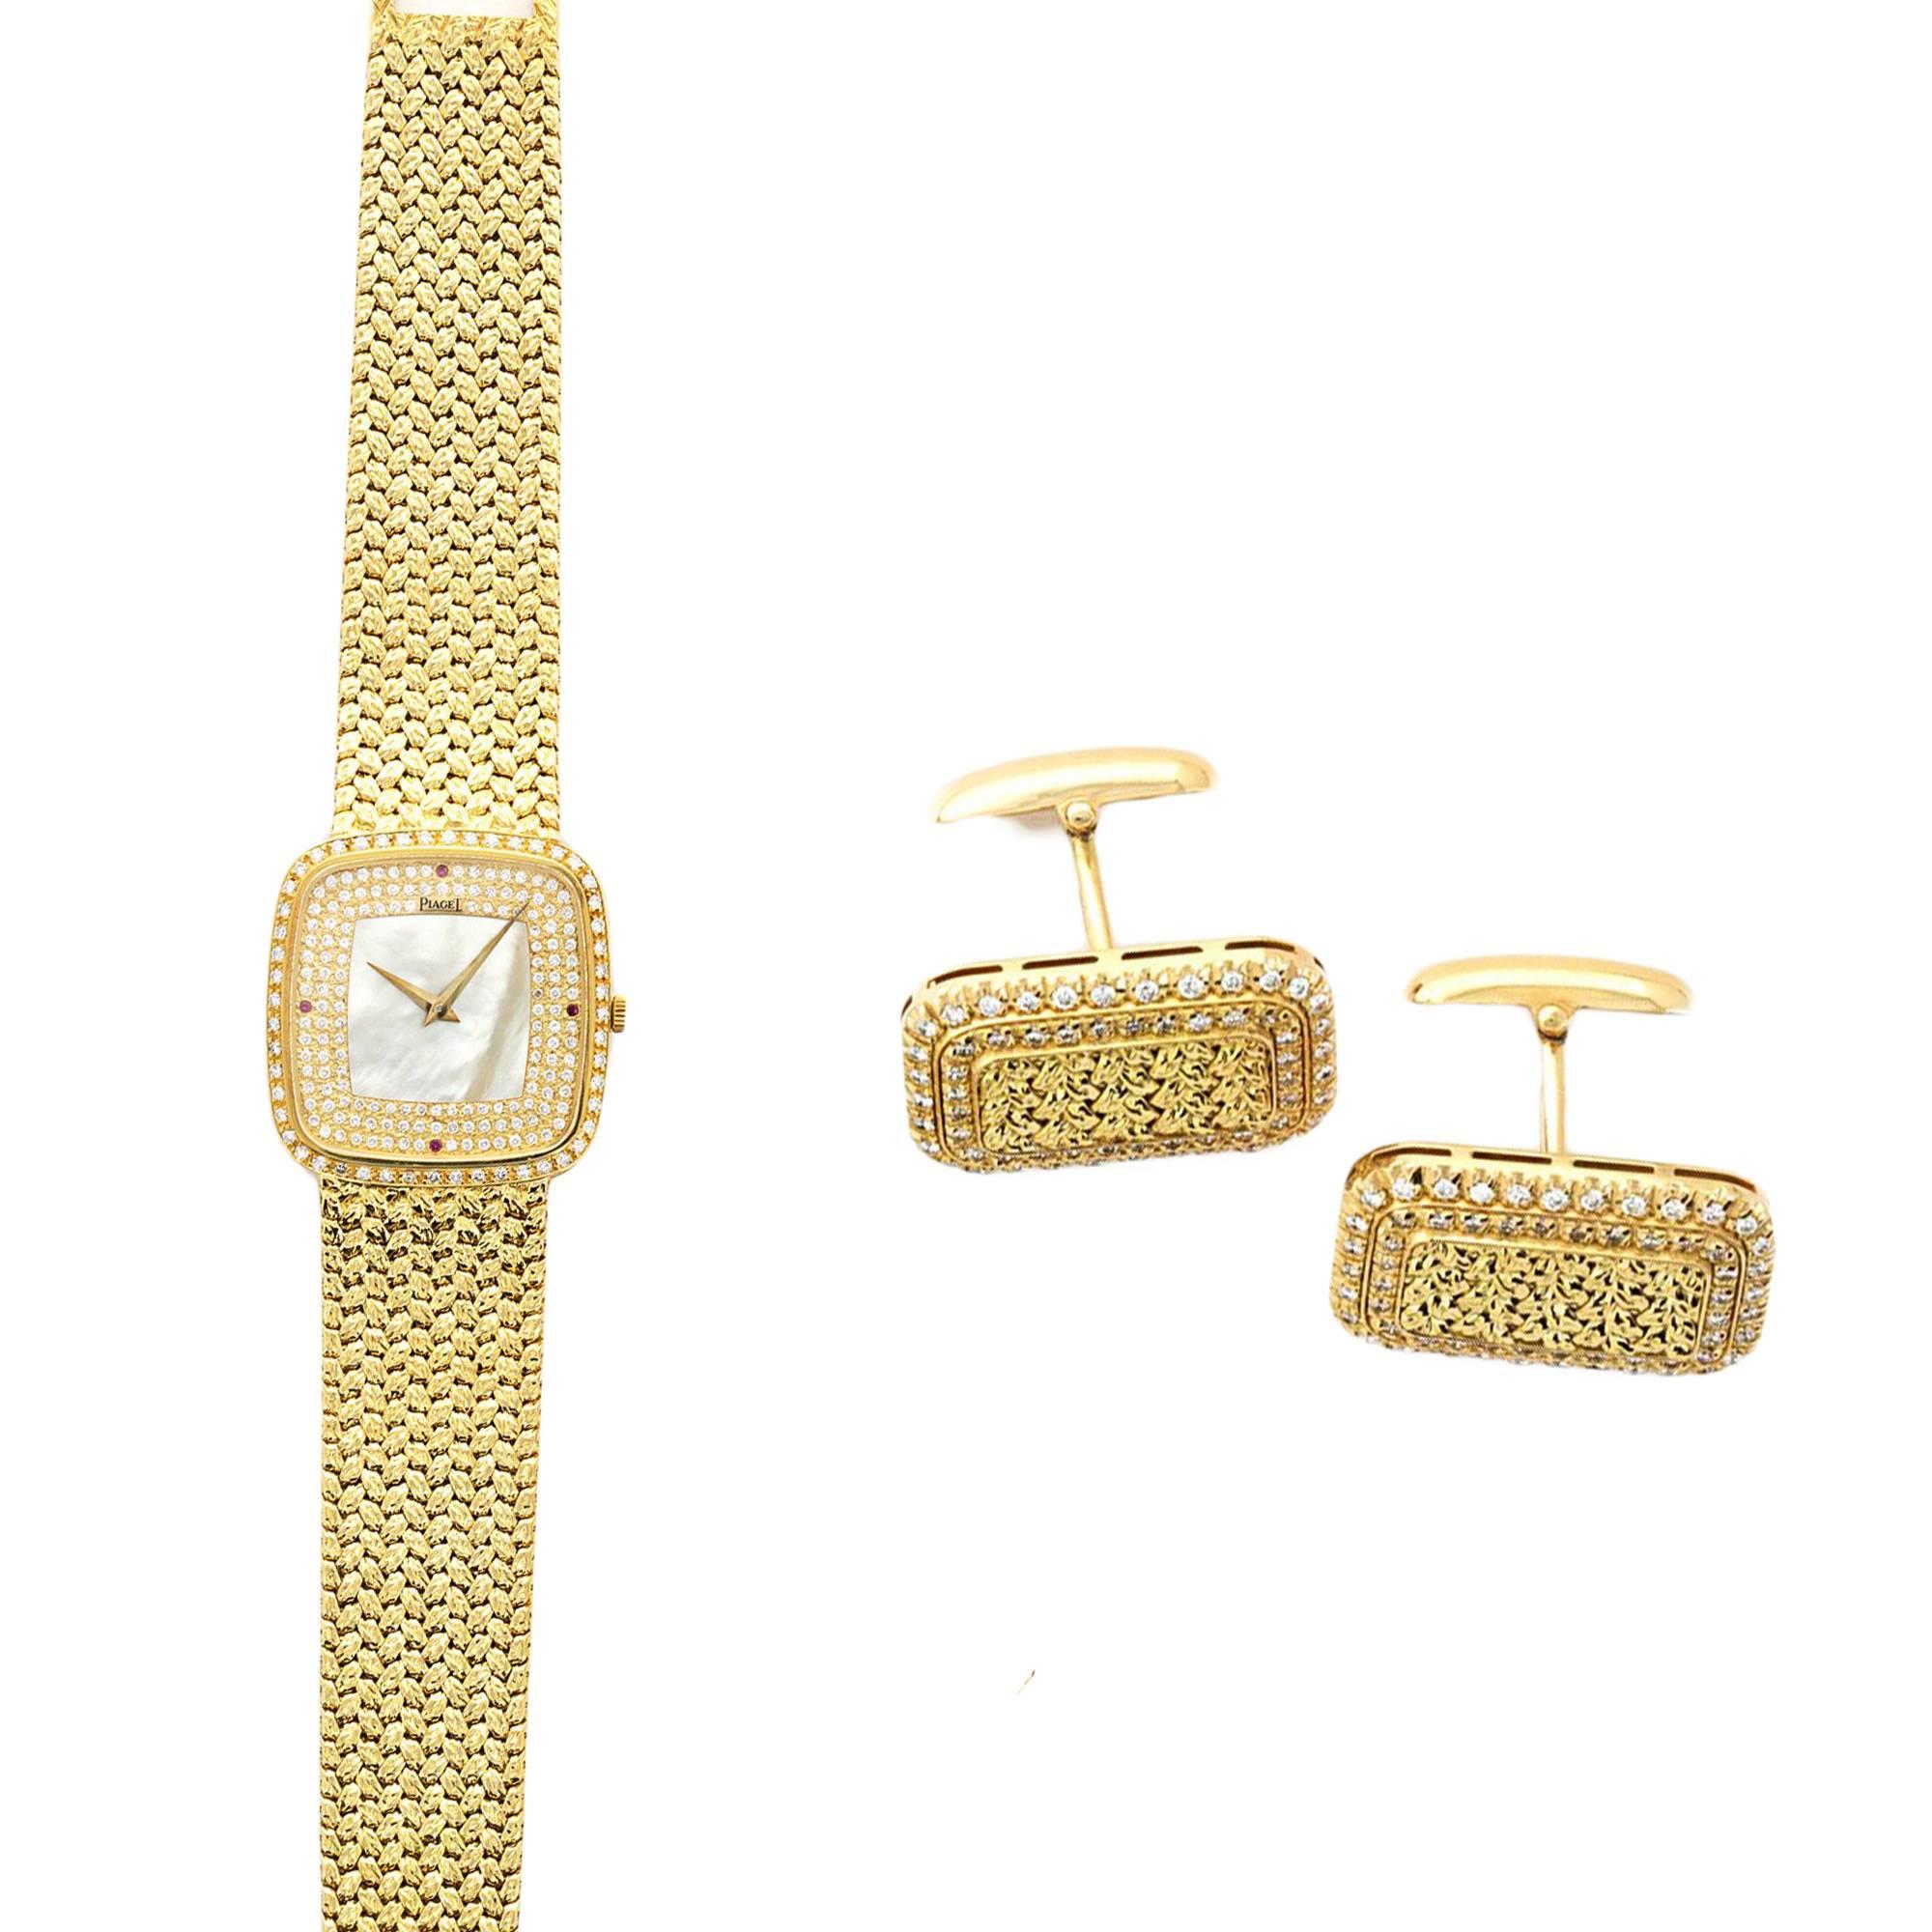 Piaget ladies Yellow Gold Diamond Pearl Wristwatch and Cufflink Set